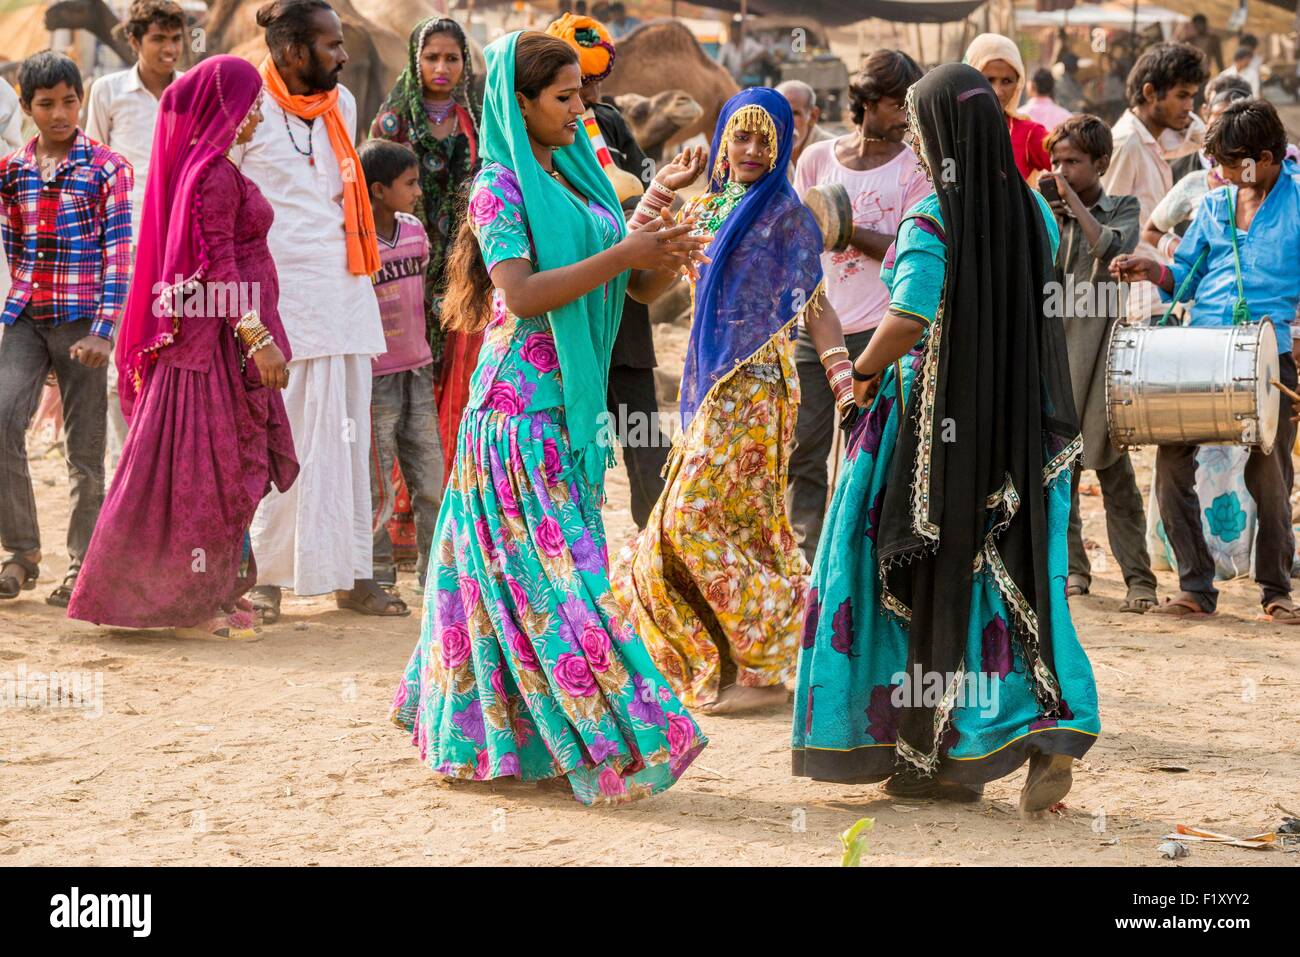 India, Rajasthan state, Pushkar, gypsies dancing at the Pushkar cattle fair Stock Photo